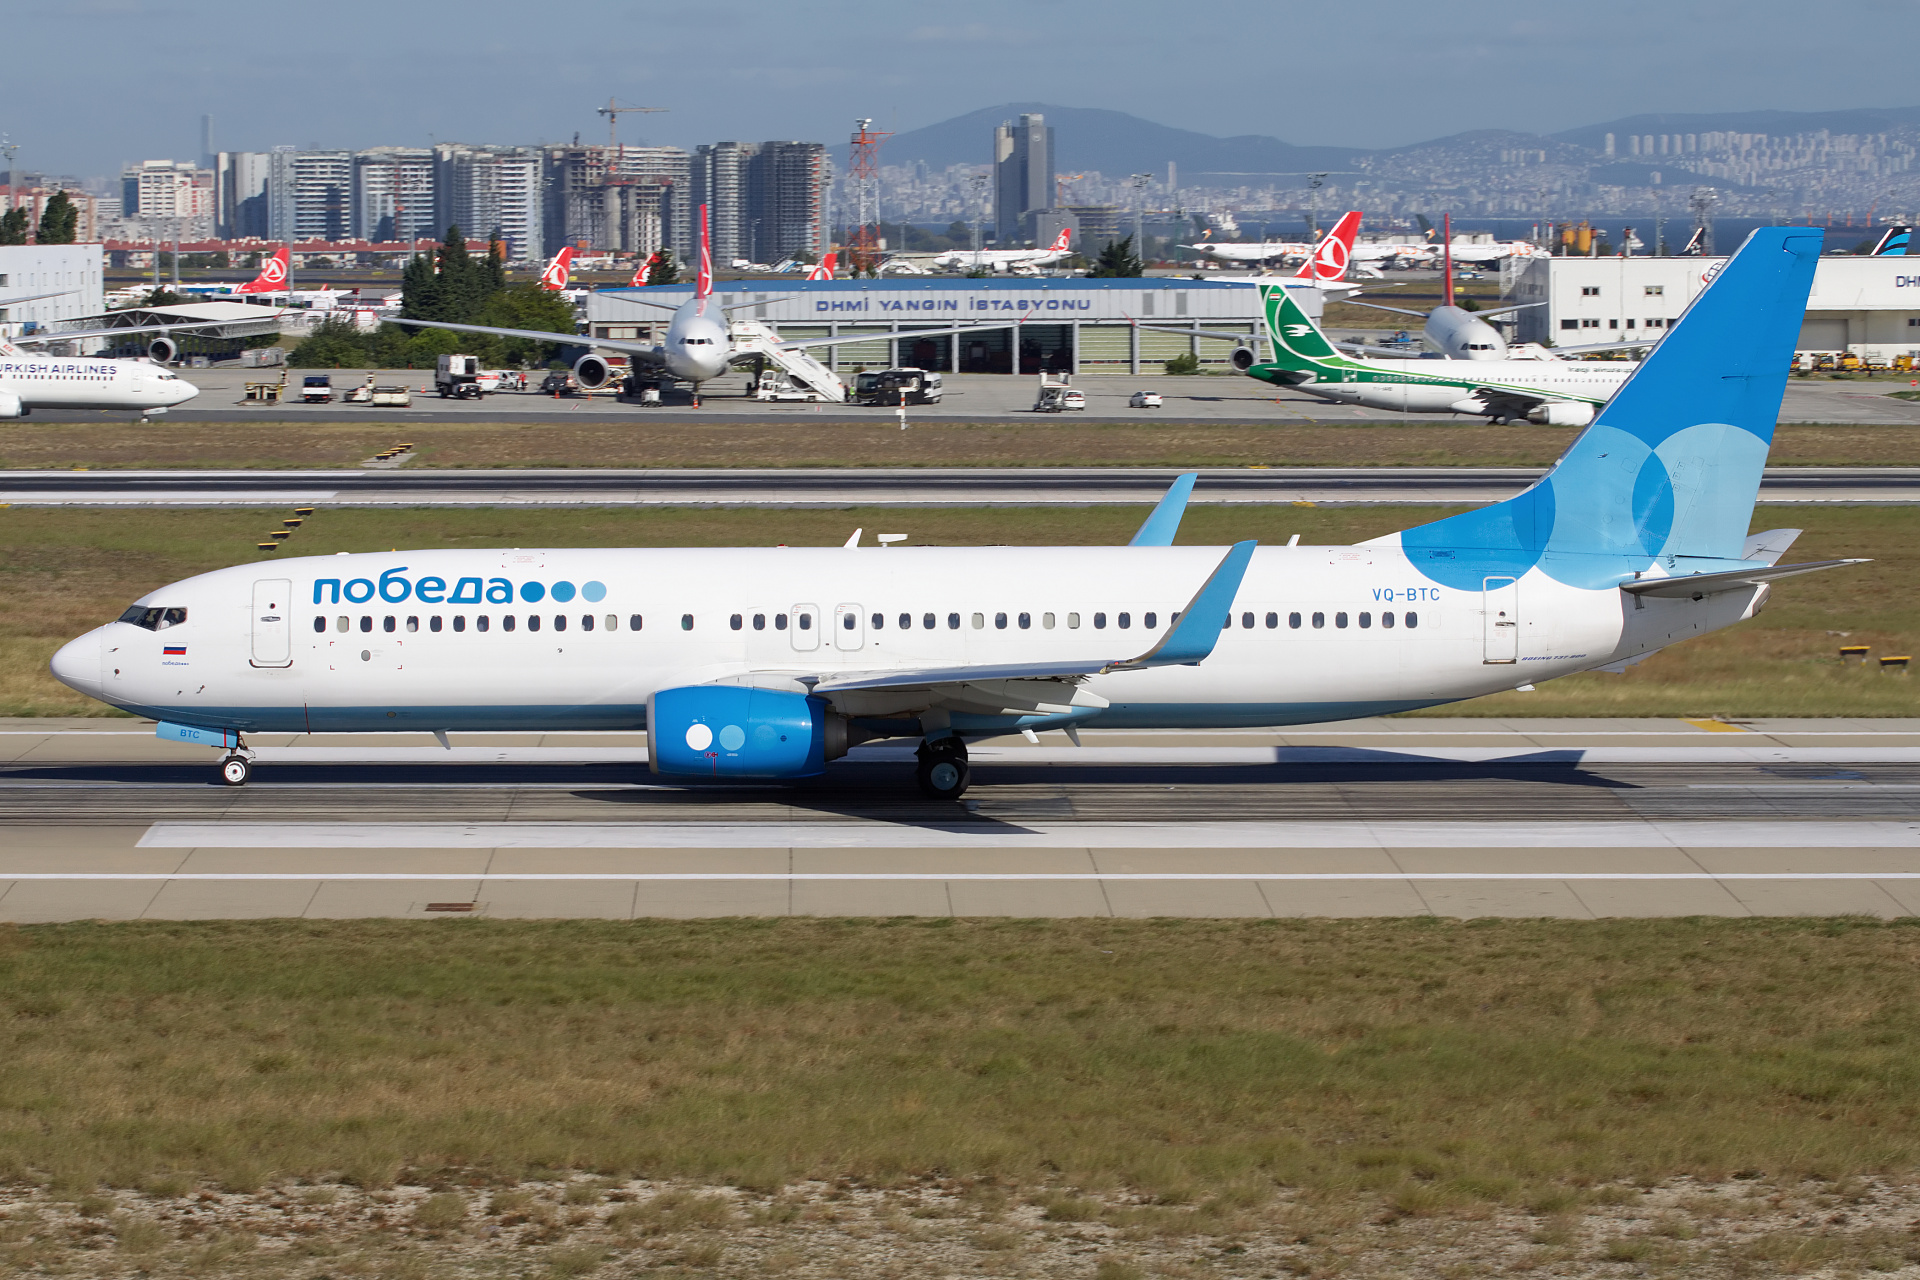 VQ-BTC, Pobeda Airlines (Samoloty » Port Lotniczy im. Atatürka w Stambule » Boeing 737-800)